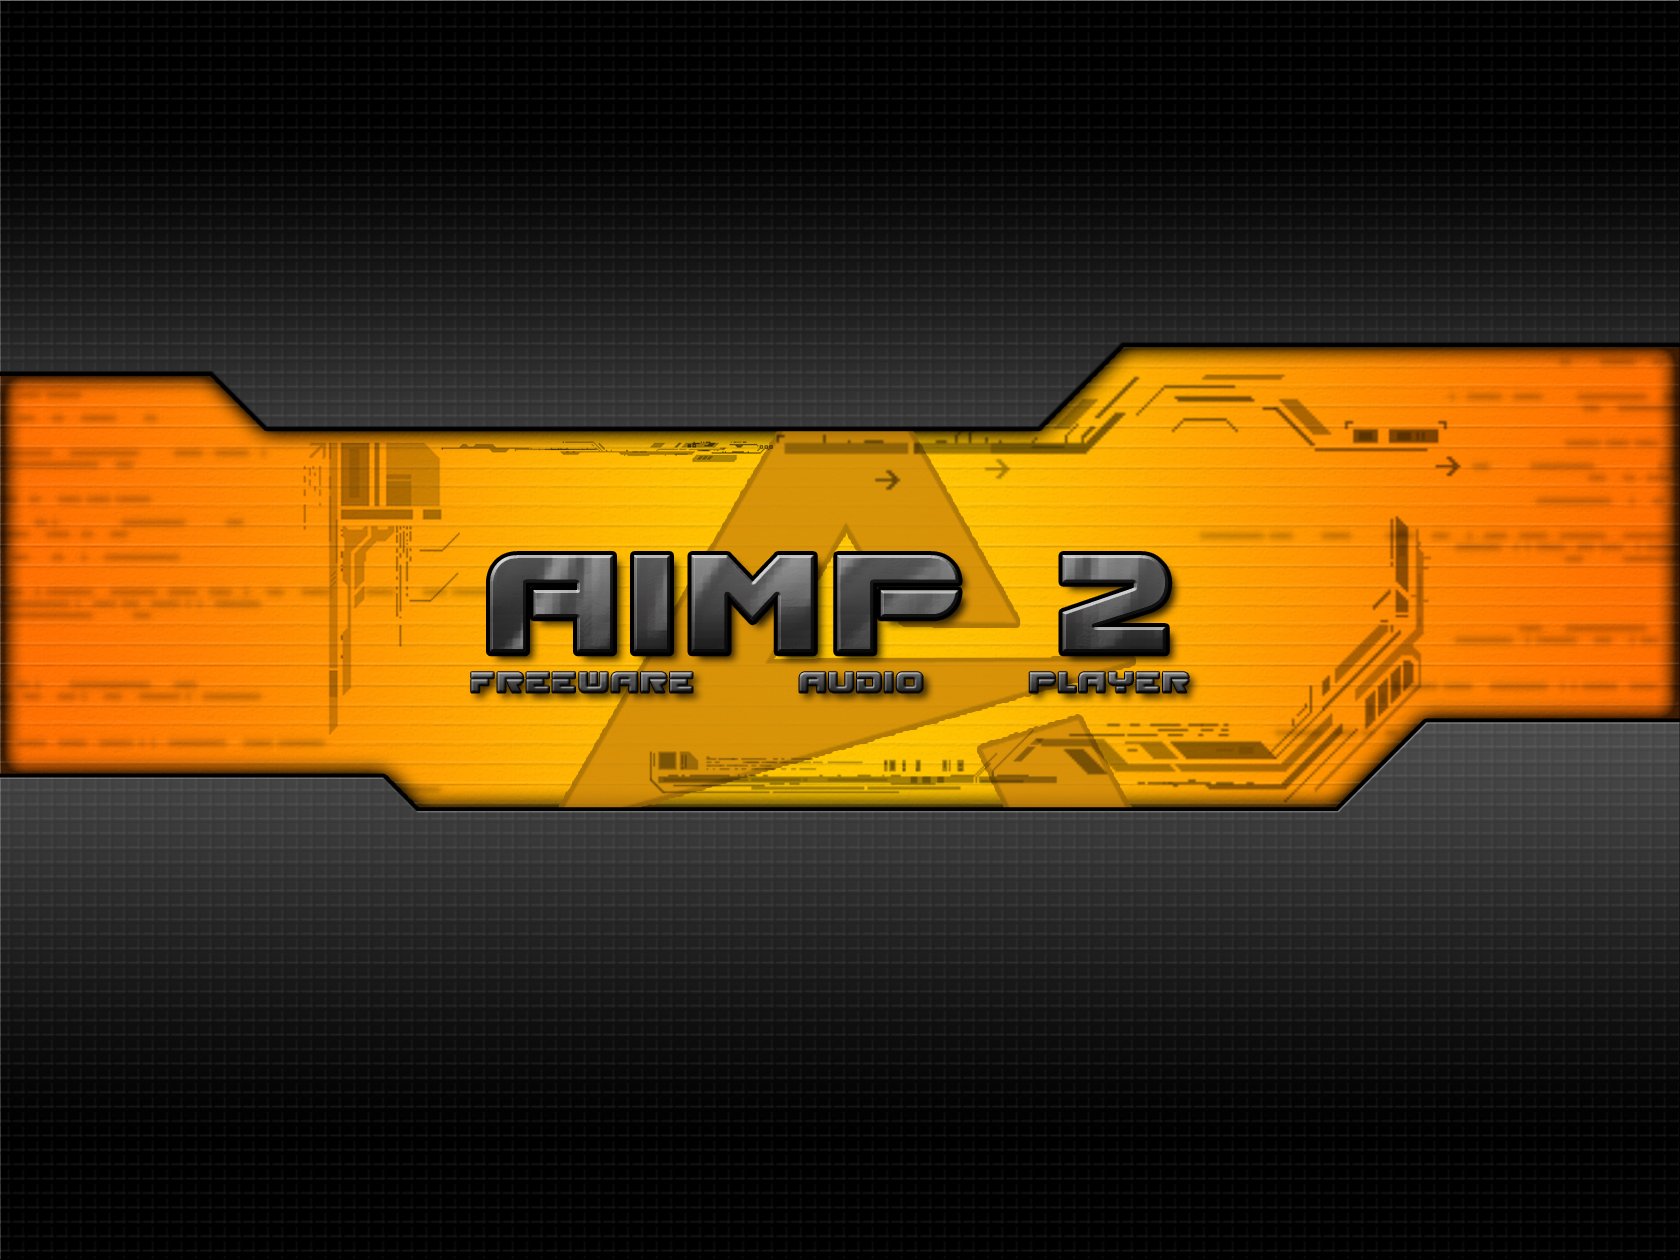 Aimp2 fonds ecran